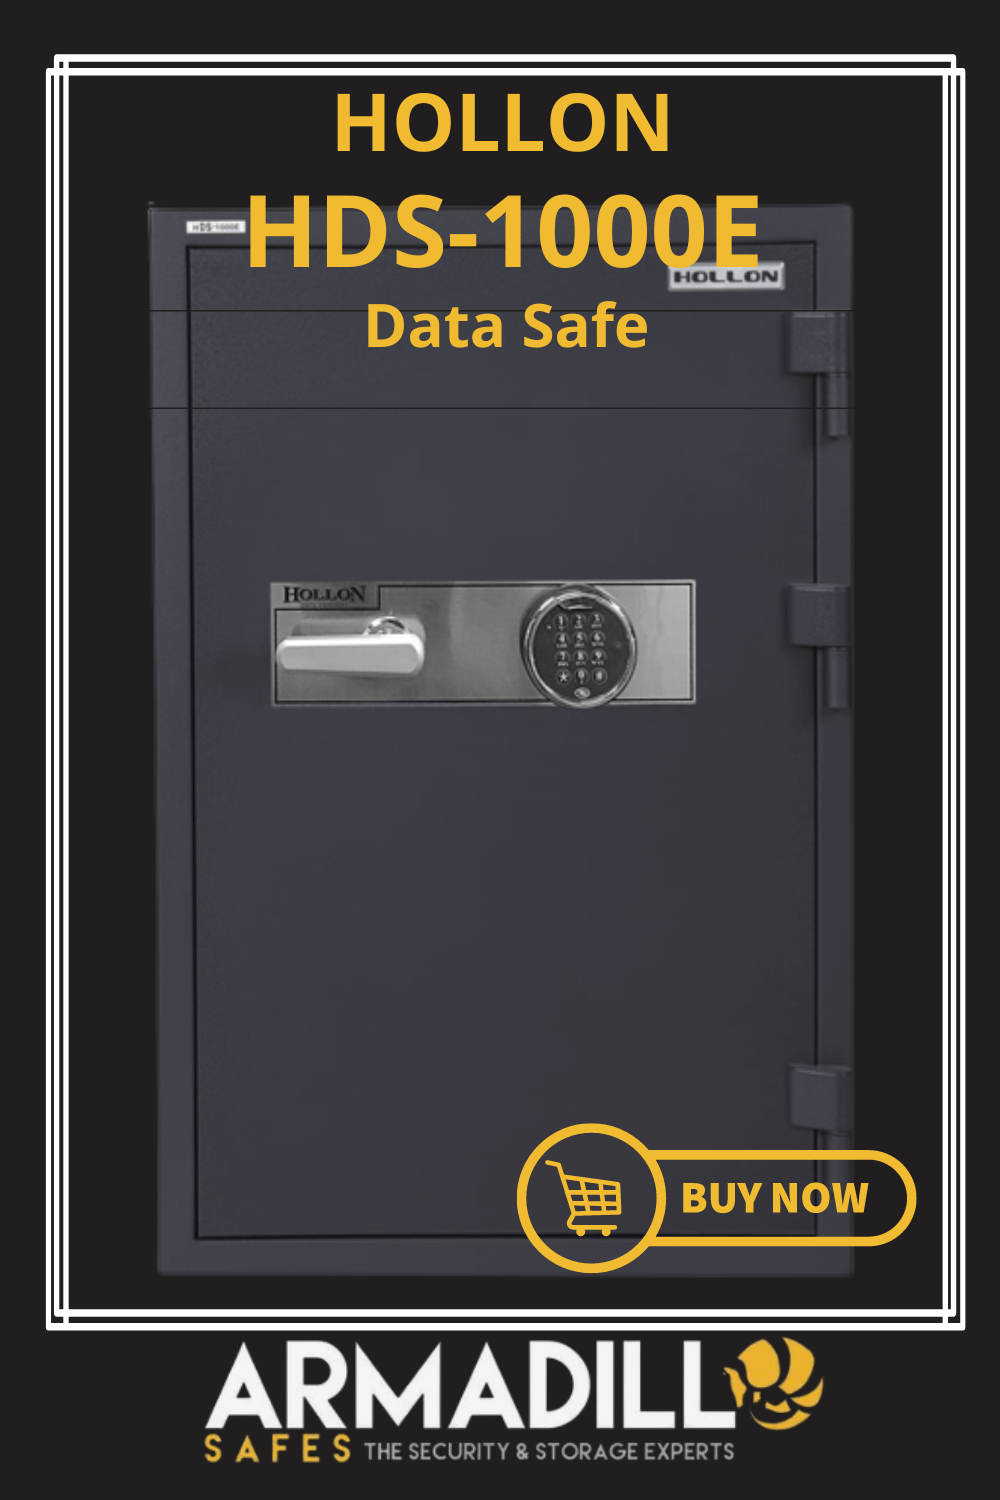 Hollon HDS-1000E Data Safe Armadillo Safe and Vault